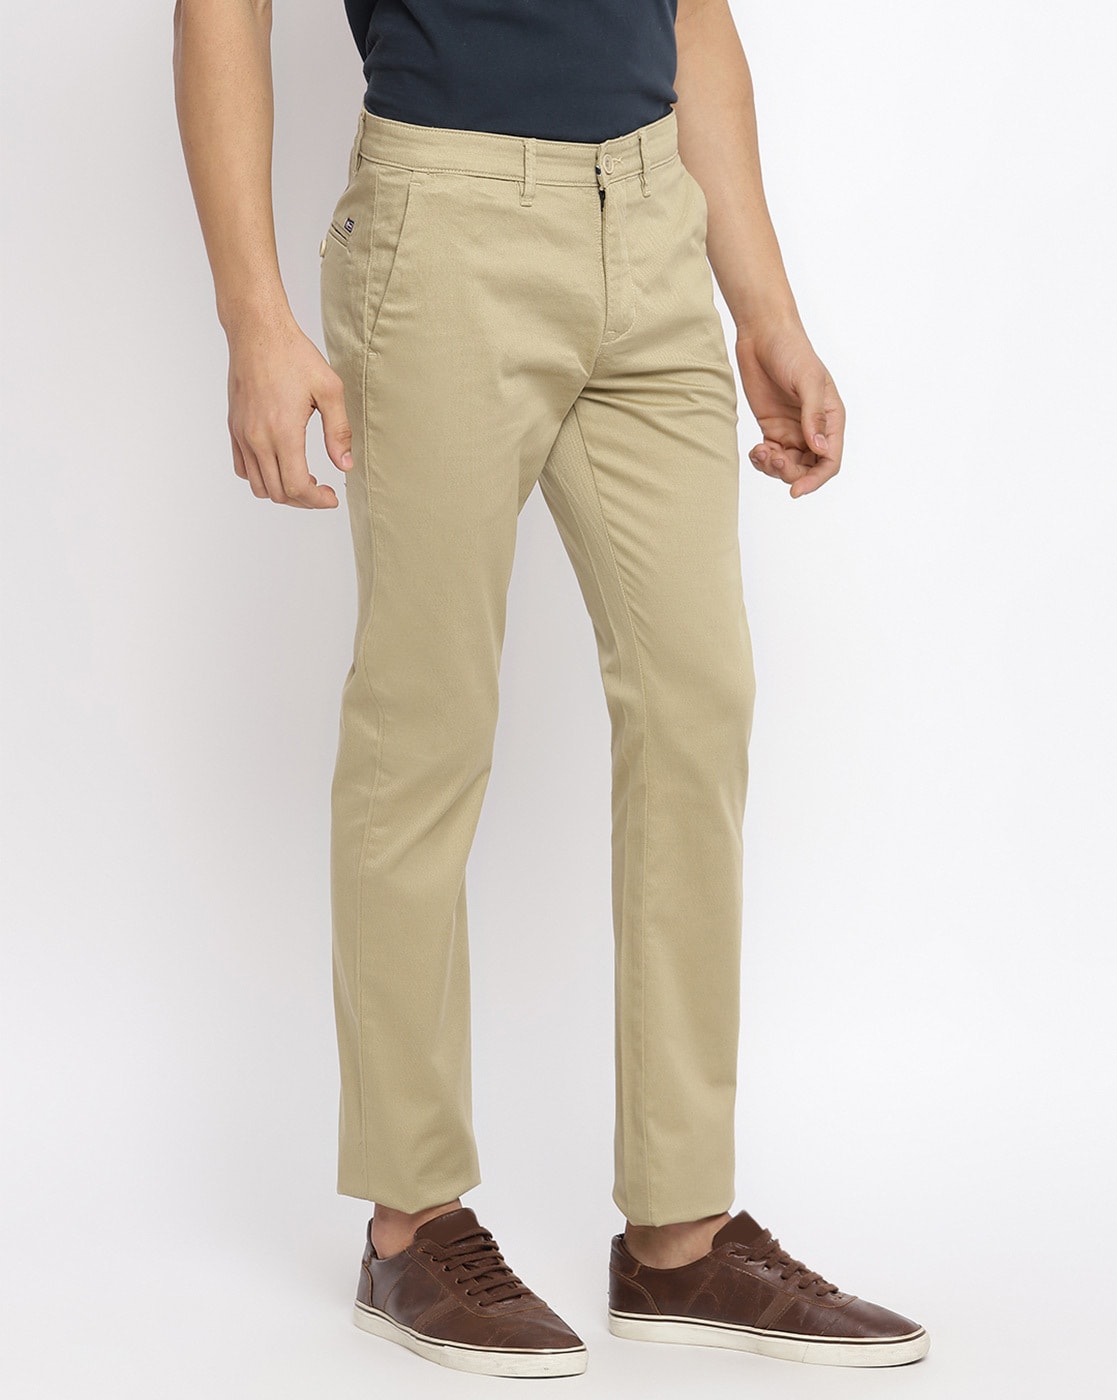 Buy Cantabil Men Grey Formal Trouser online